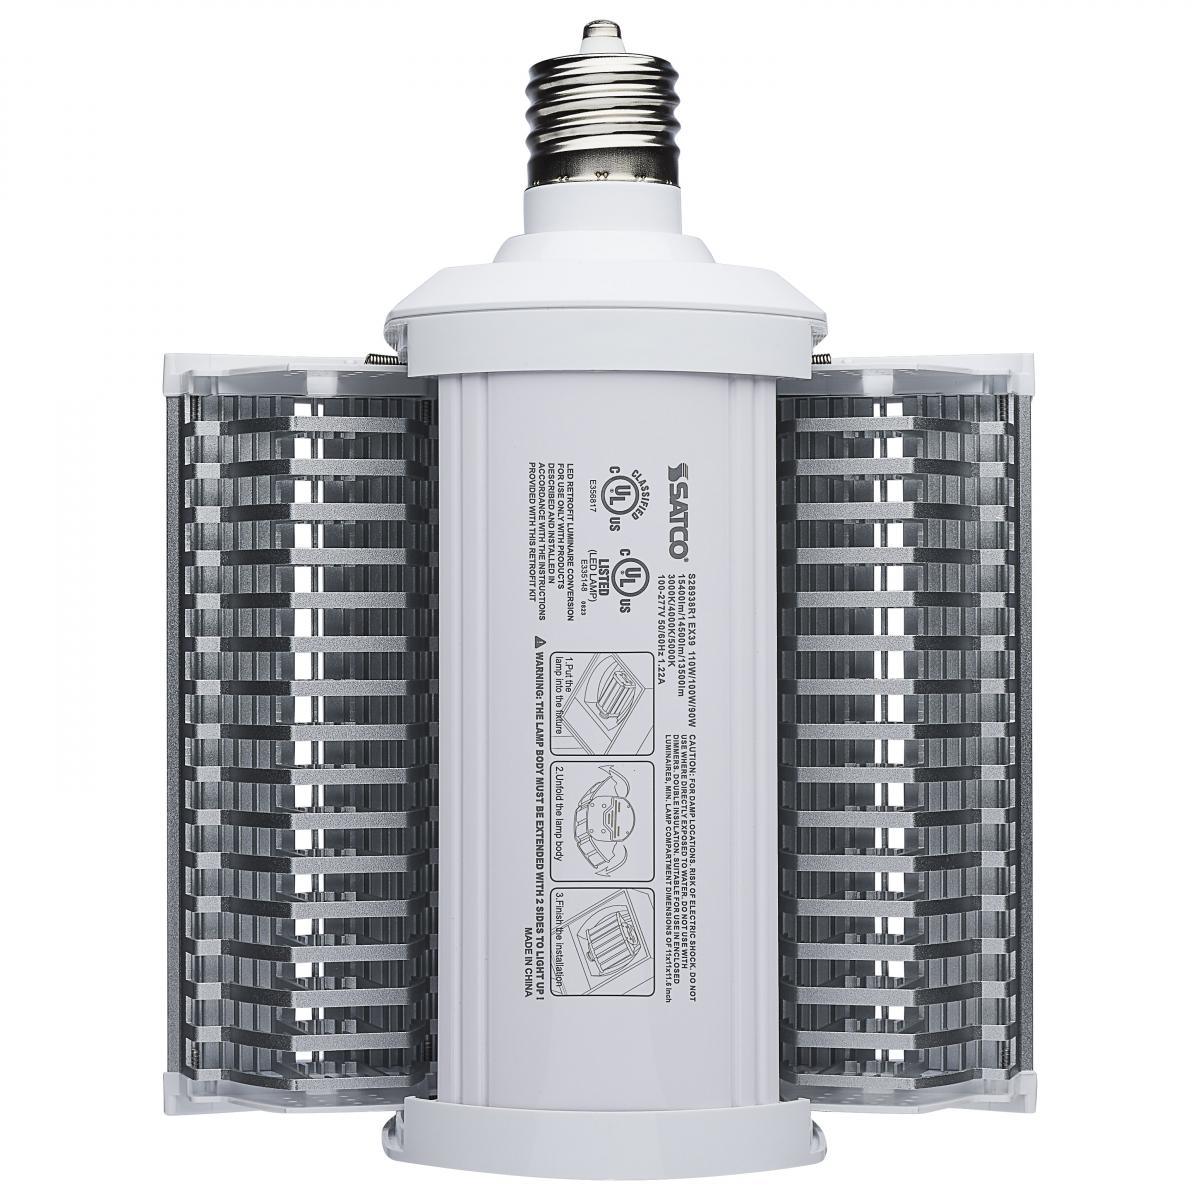 Wall Pack/Shoebox LED Retrofit Lamp, Wattage Selectable 90/100/110W, 15400 Lumens, Selectable CCT 30K/40K/50K, EX39 Mogul Extended Base, 120-277V